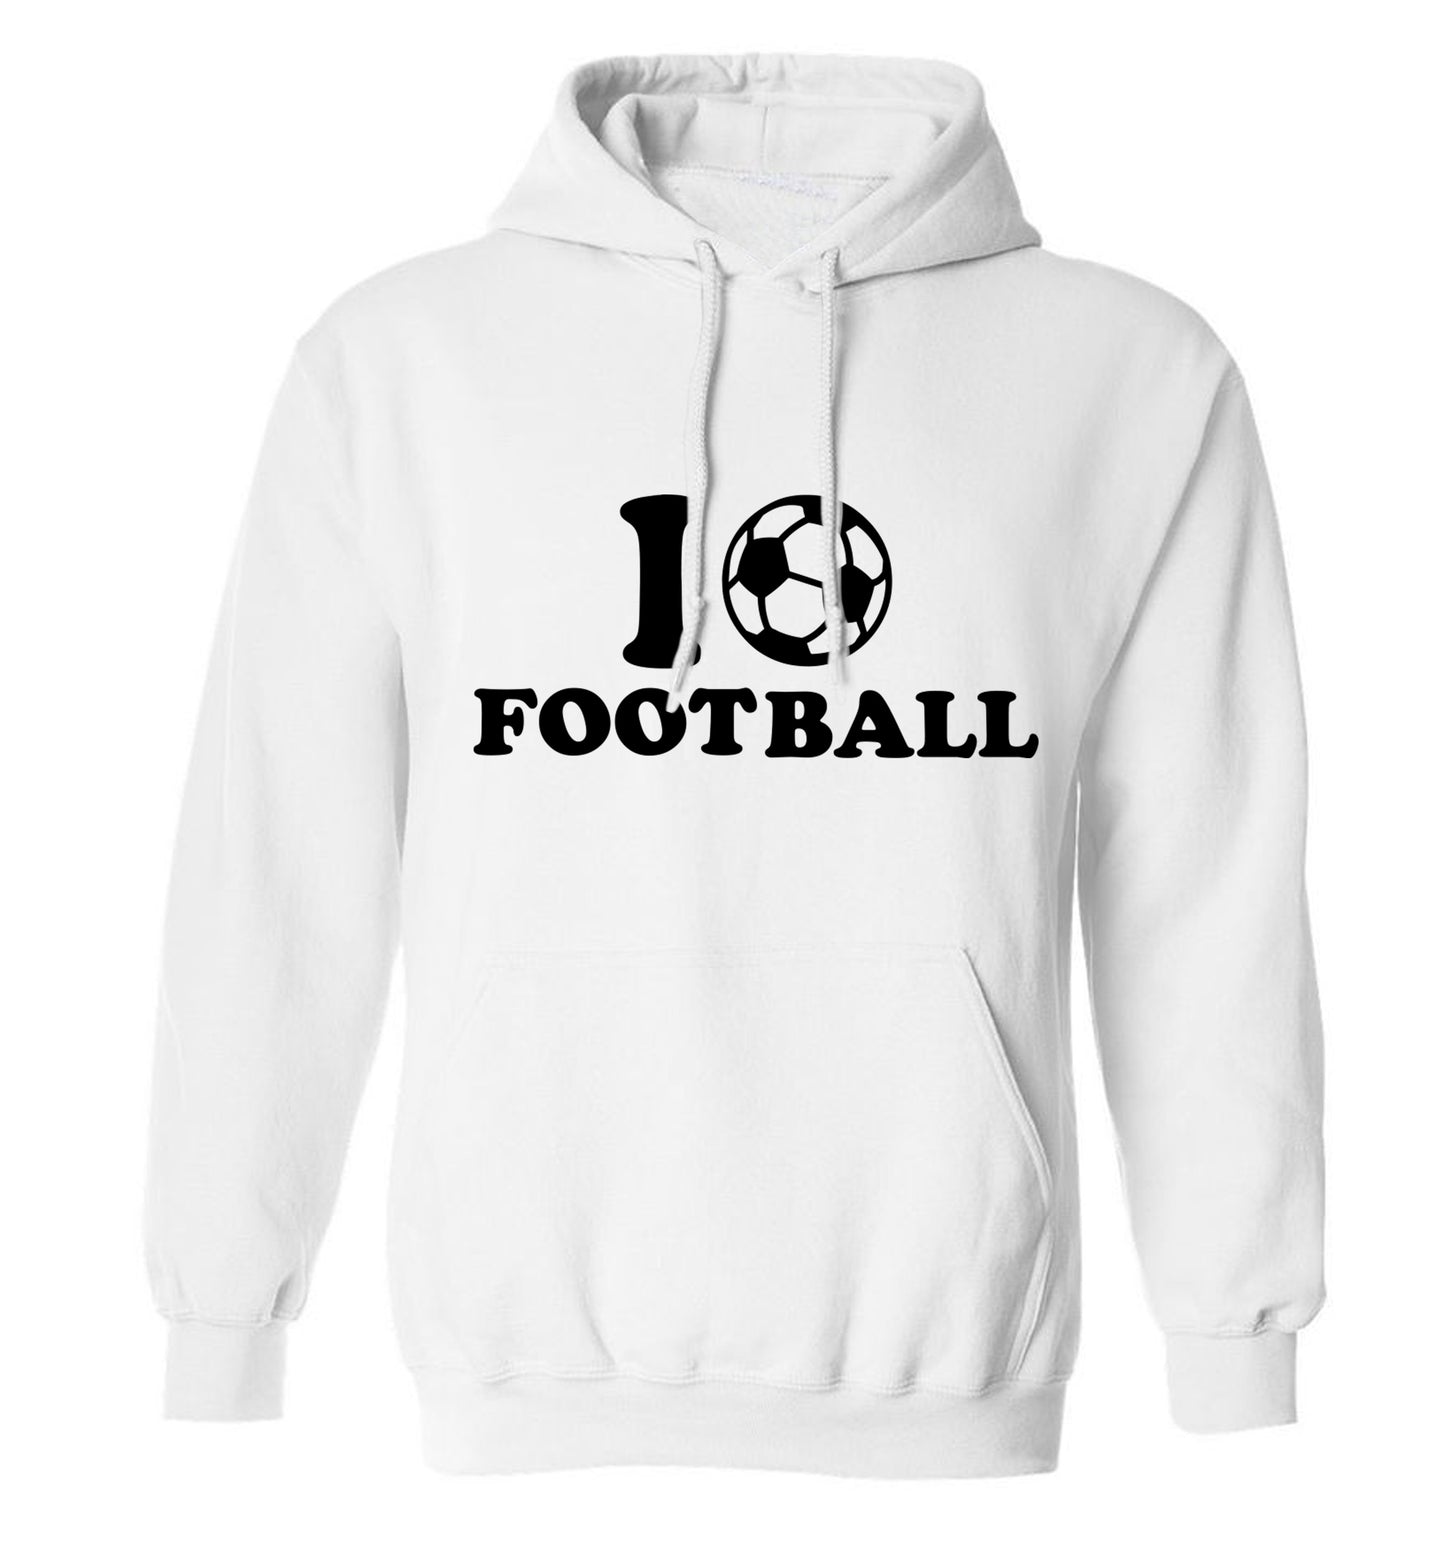 I love football adults unisexwhite hoodie 2XL